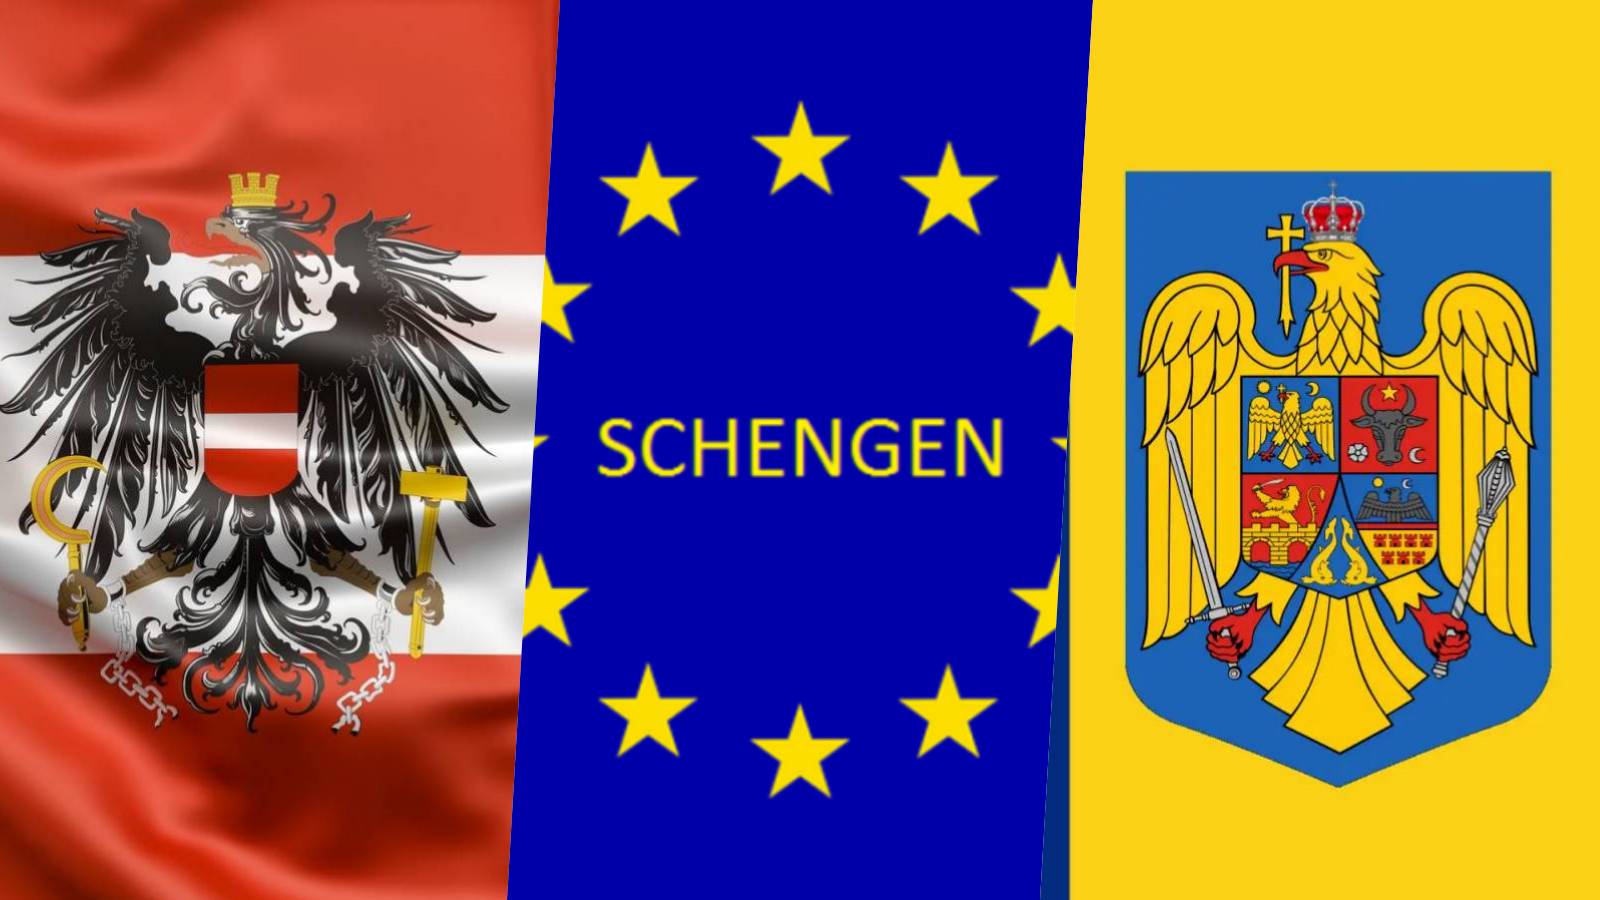 Austria Karl Nehammer Centrul Anunturilor ULTIM MOMENT Cand Adera Romania Schengen